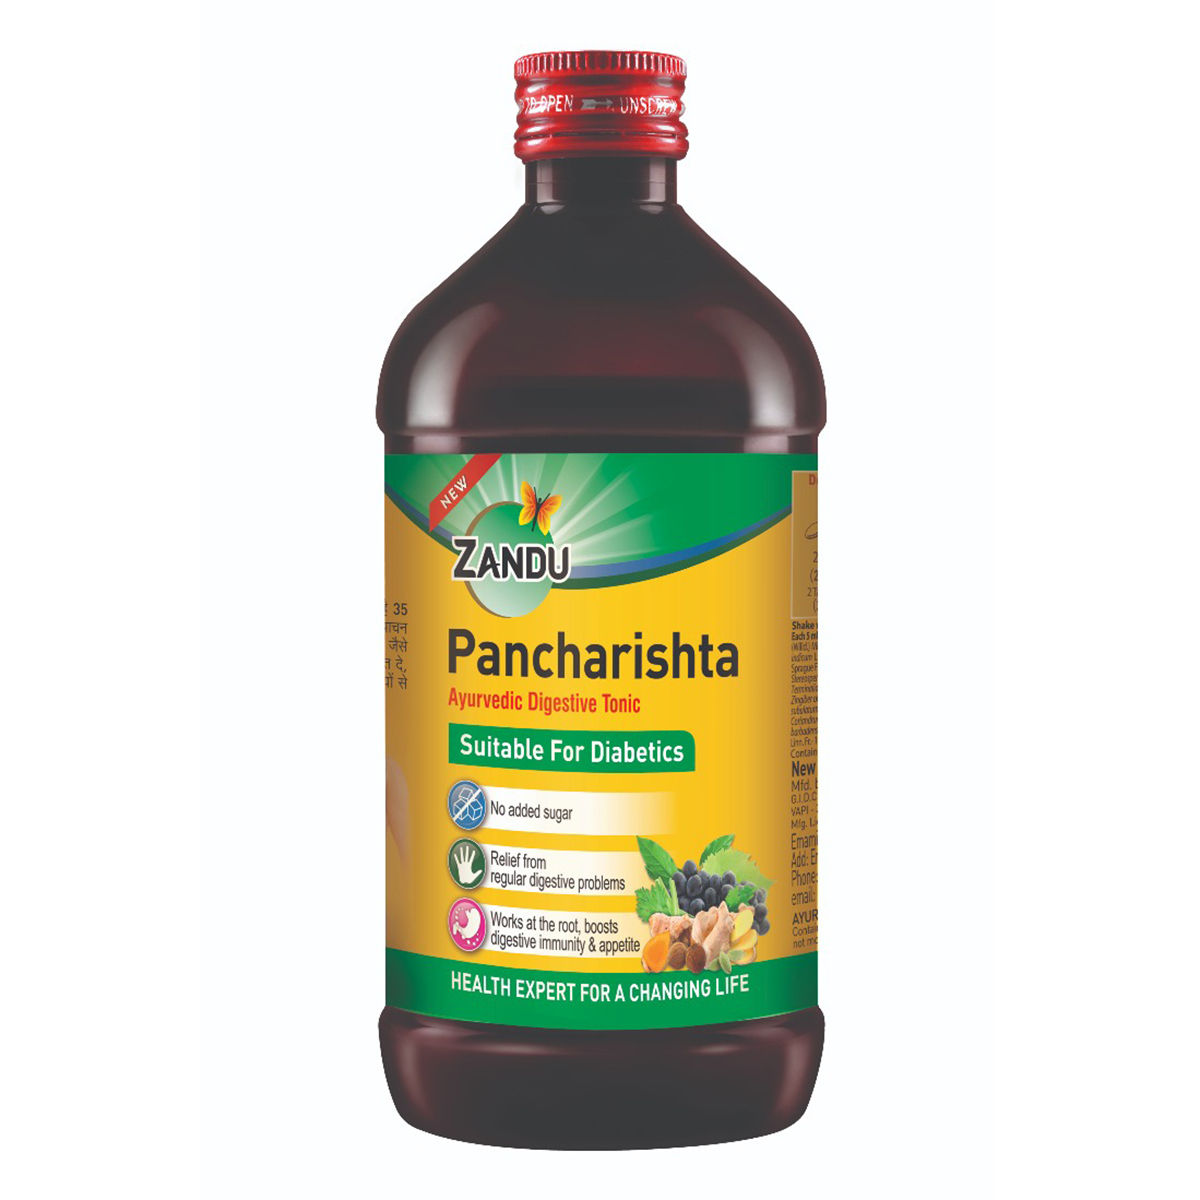 Buy Zandu Pancharishta Ayurvedic Digestive Tonic Suitable for Diabetics, 450 ml Online